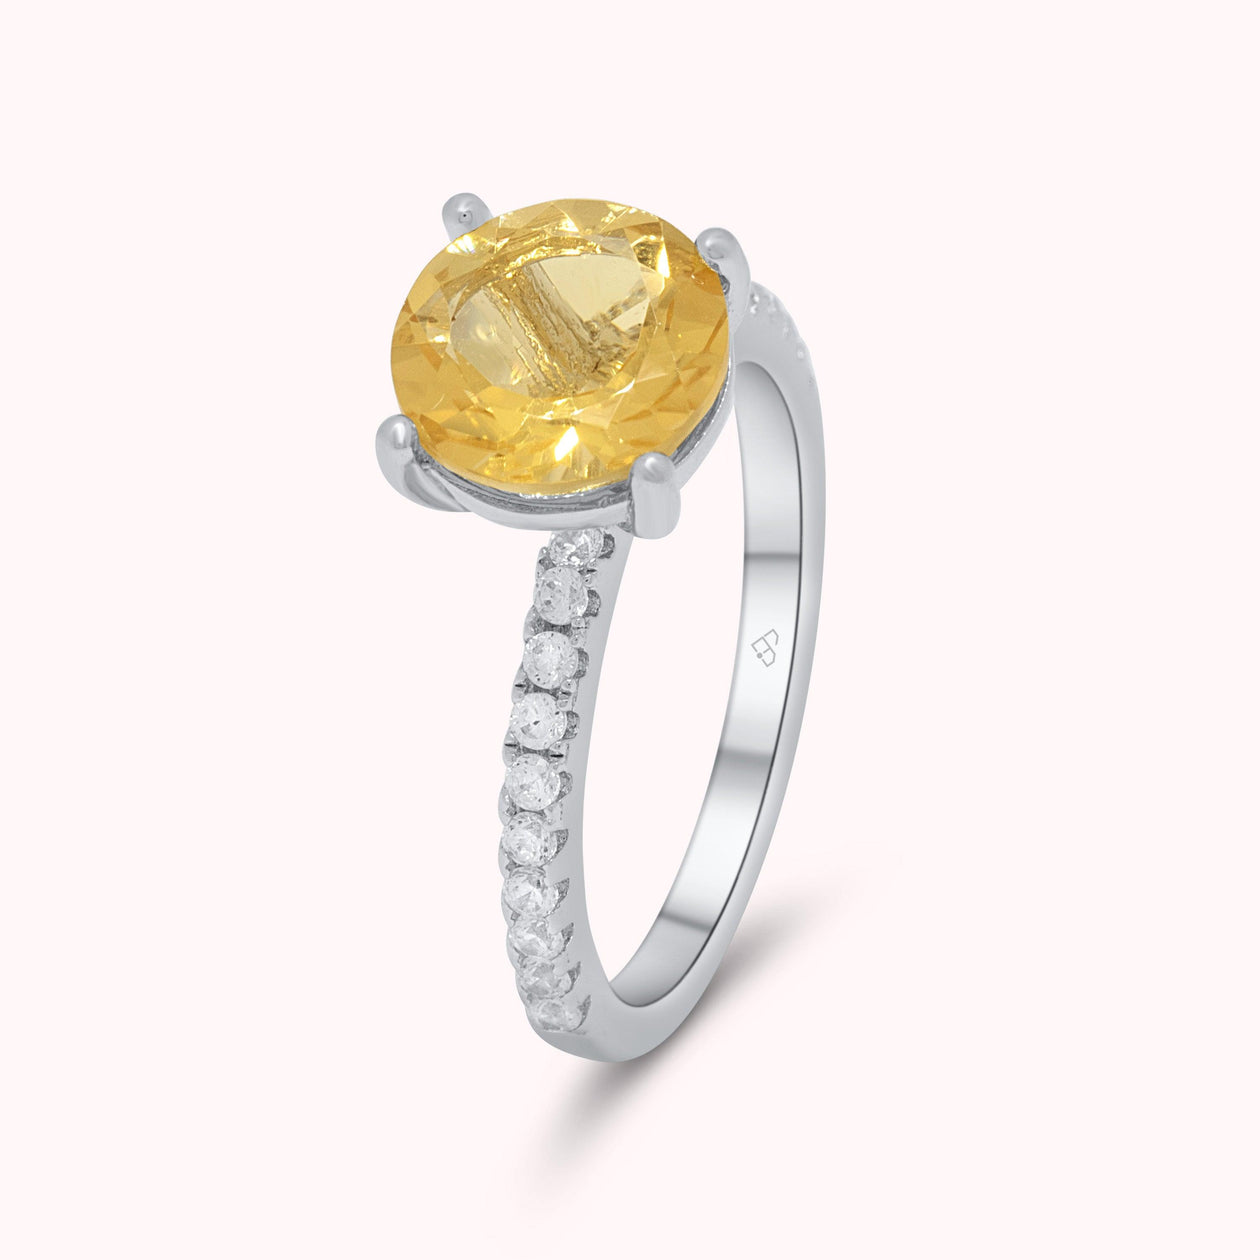 GOLDEN SUN JEWELRY: Hand picked diamonds elegantly set into this